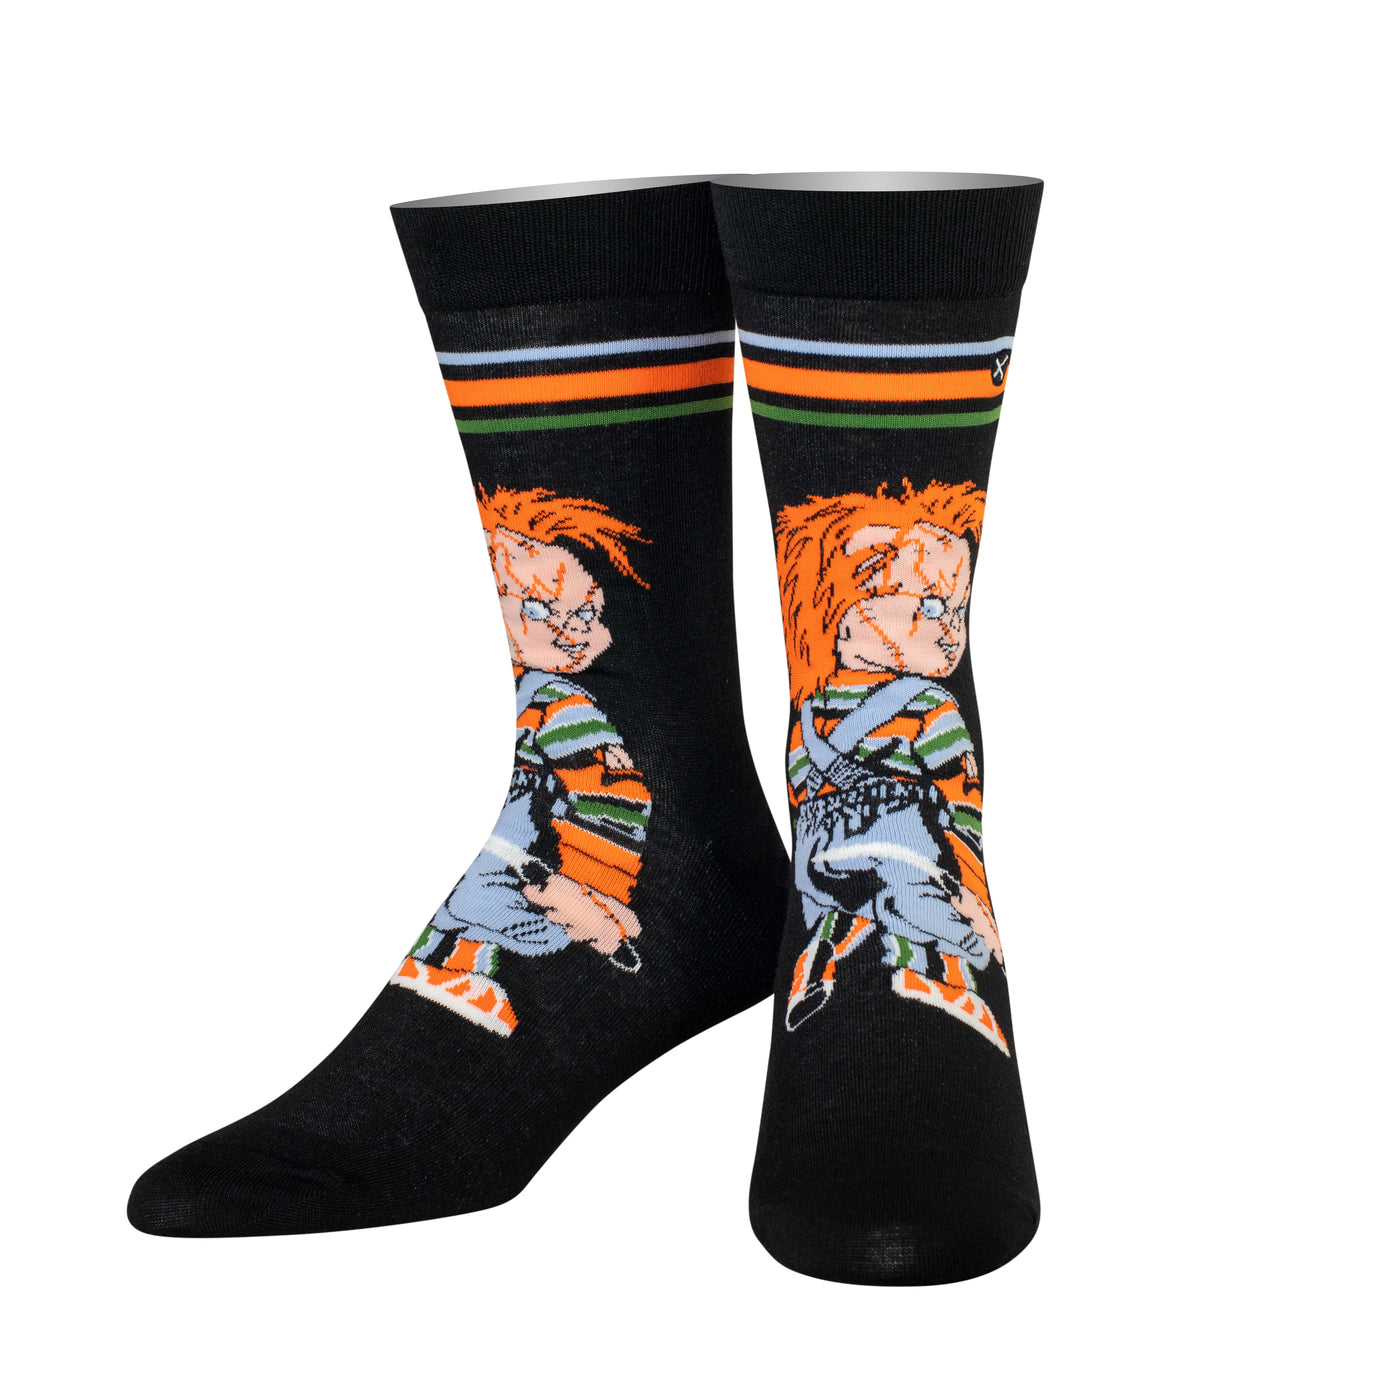 Chucky's Back Crew Socks